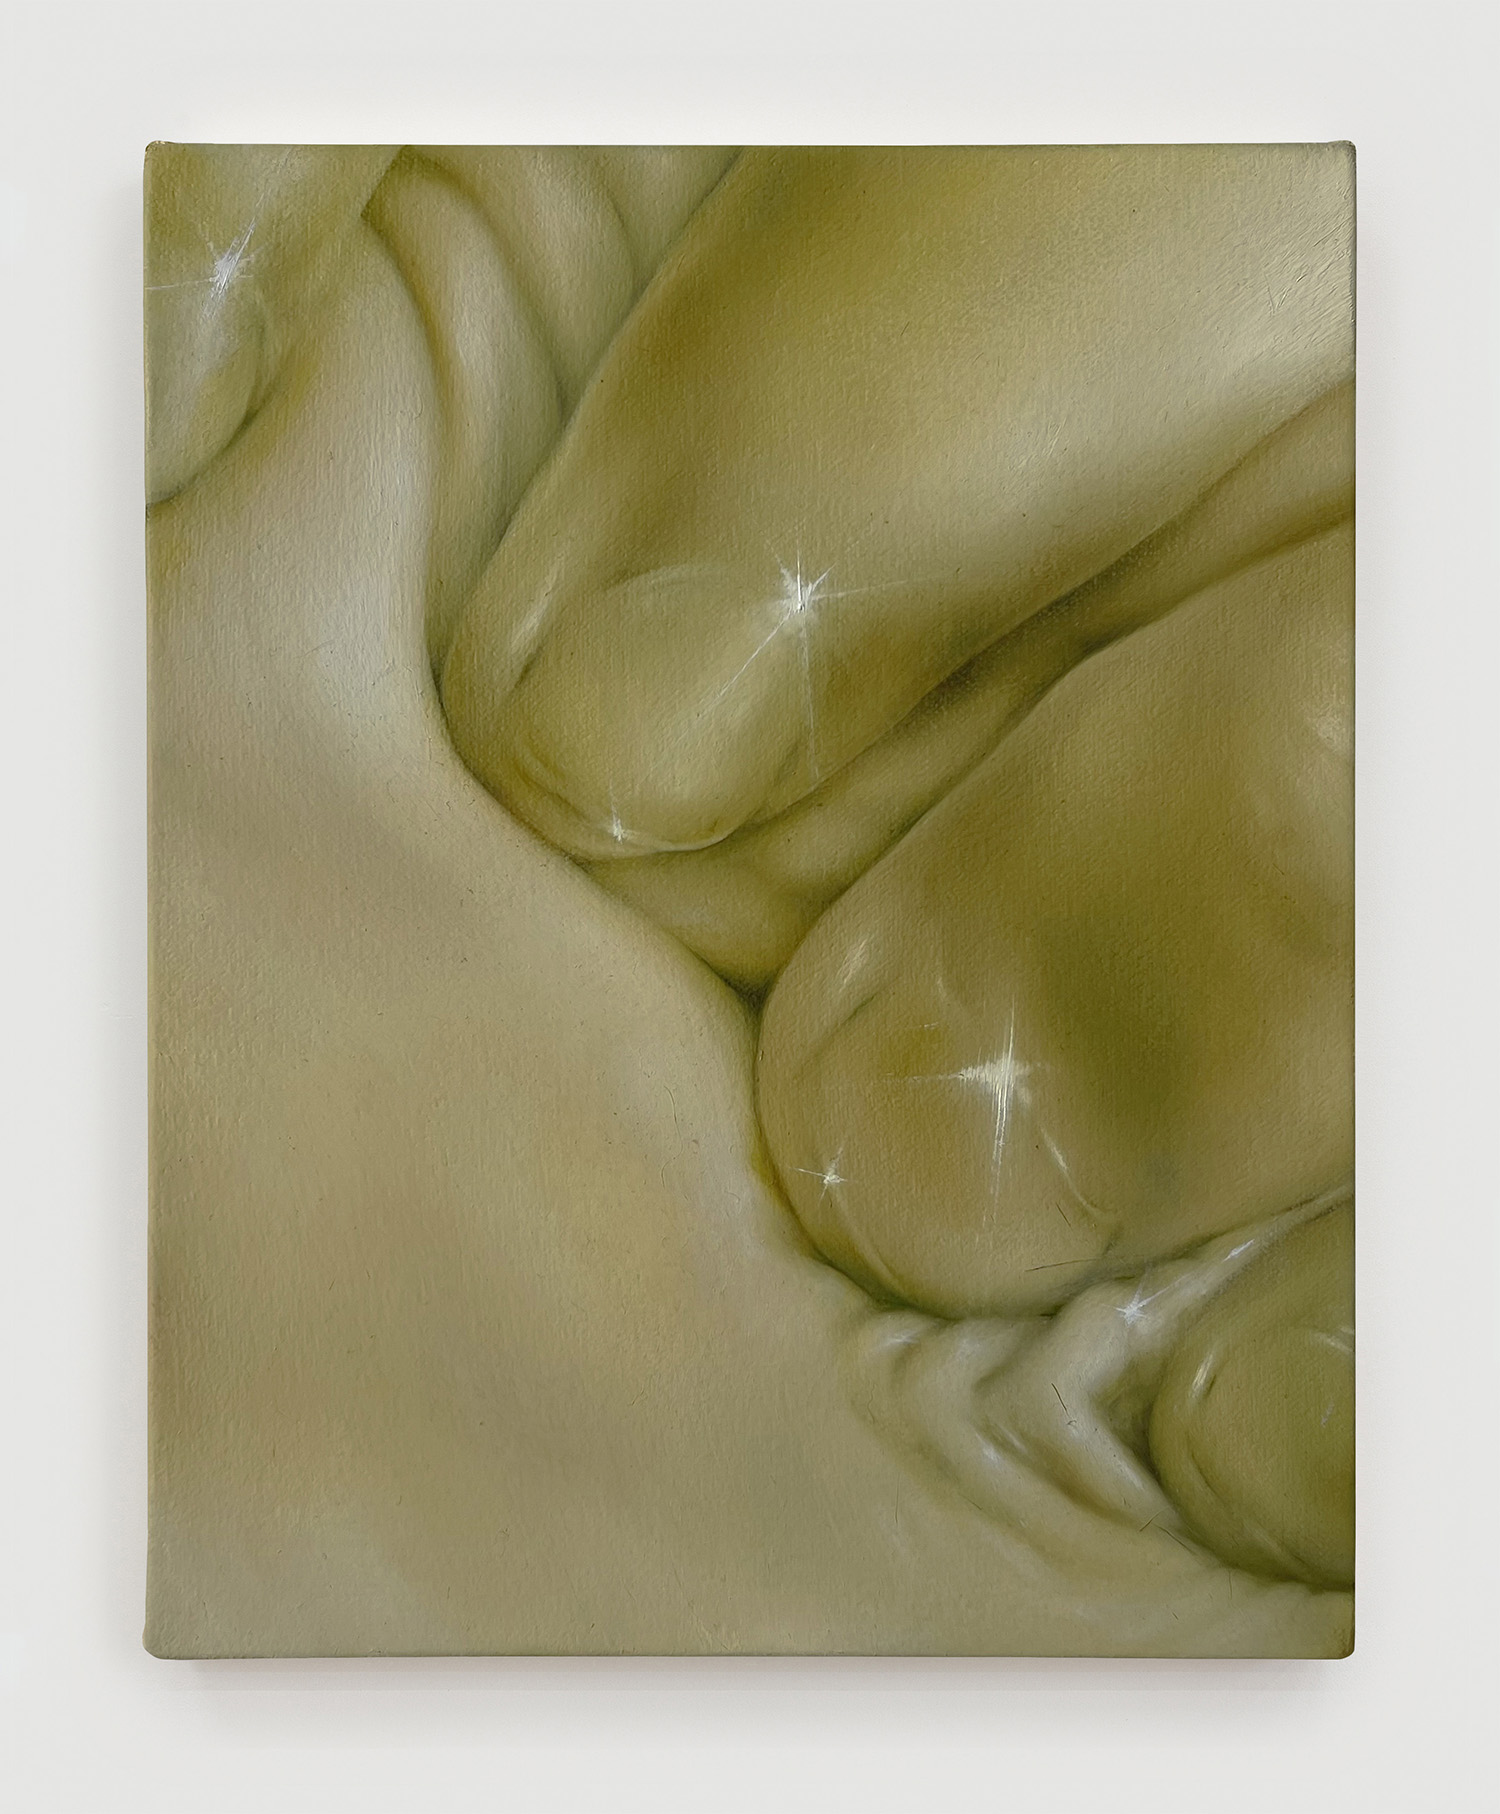 Alejandra Moros, Tightly, 2022, oil on canvas, 25.5 x 20.5 x 5 cm, 10 x 8 1/8 x 2 in